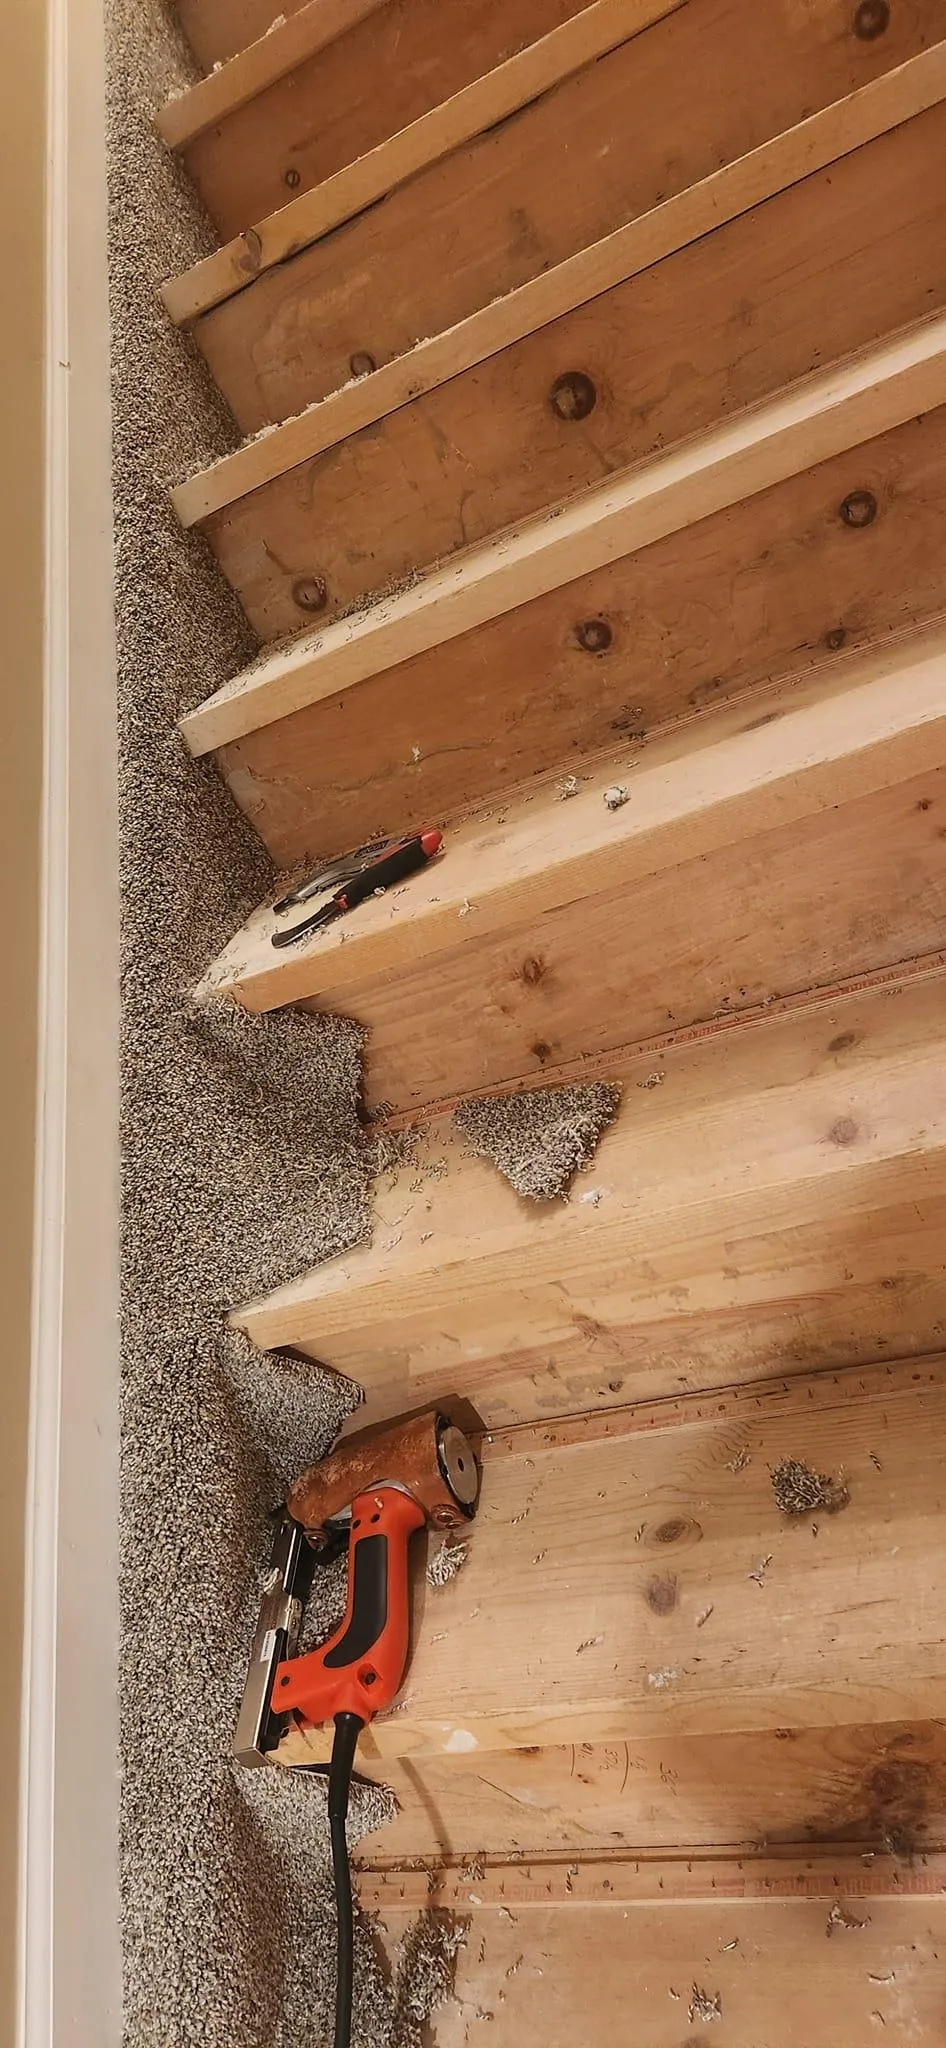 LVT/LVP Installation for Cut a Rug Flooring Installation in Lake Orion, MI